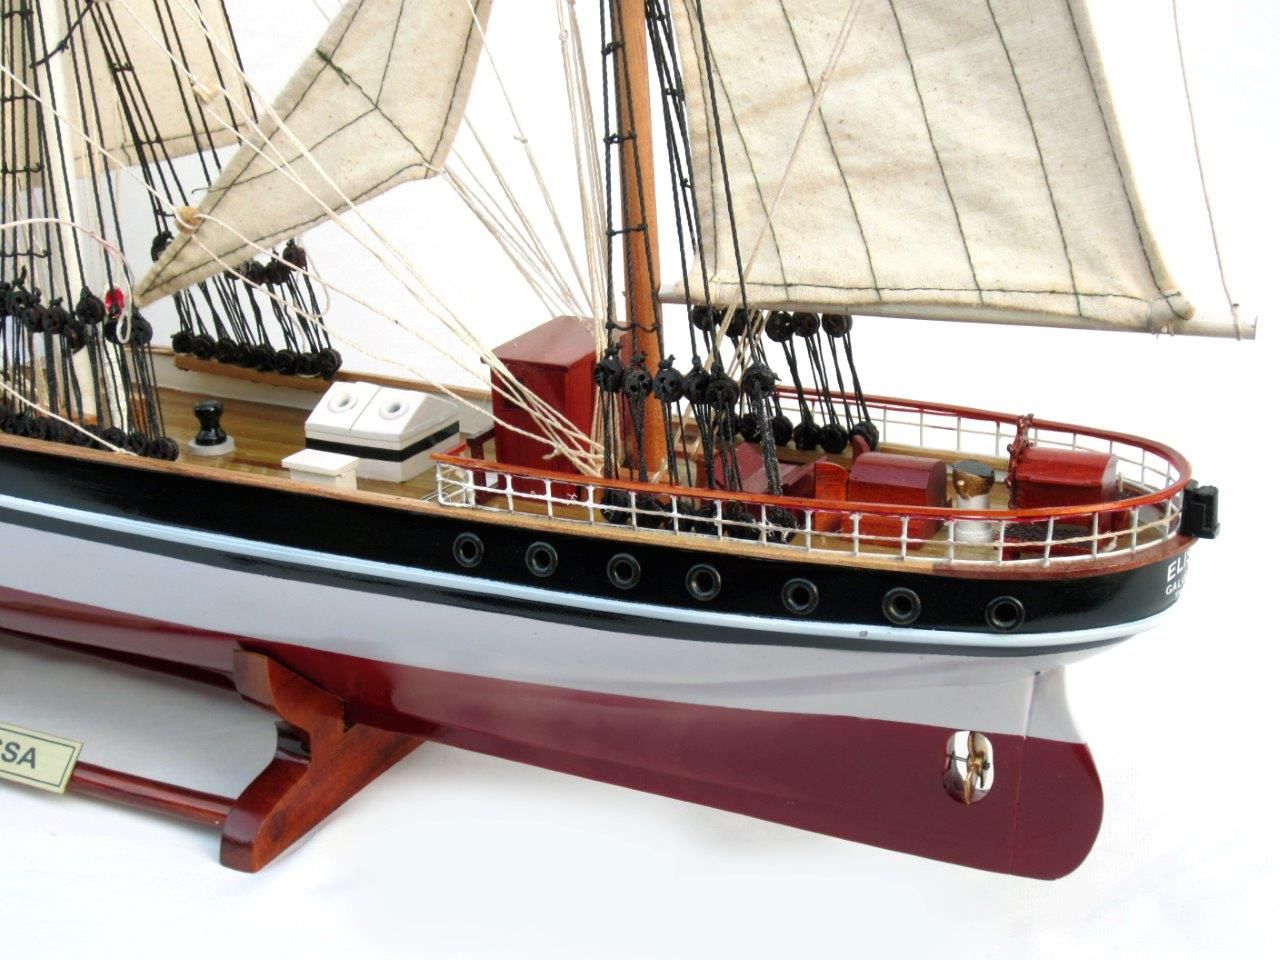 Elissa Wooden Model Ship - GN (TS0126P)